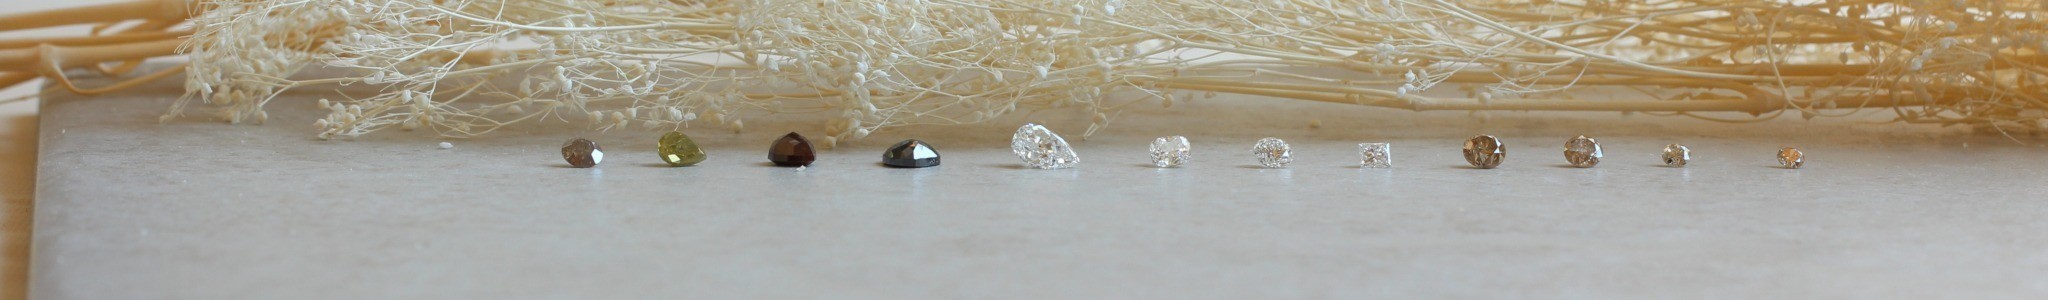 Diamond Product Line Image